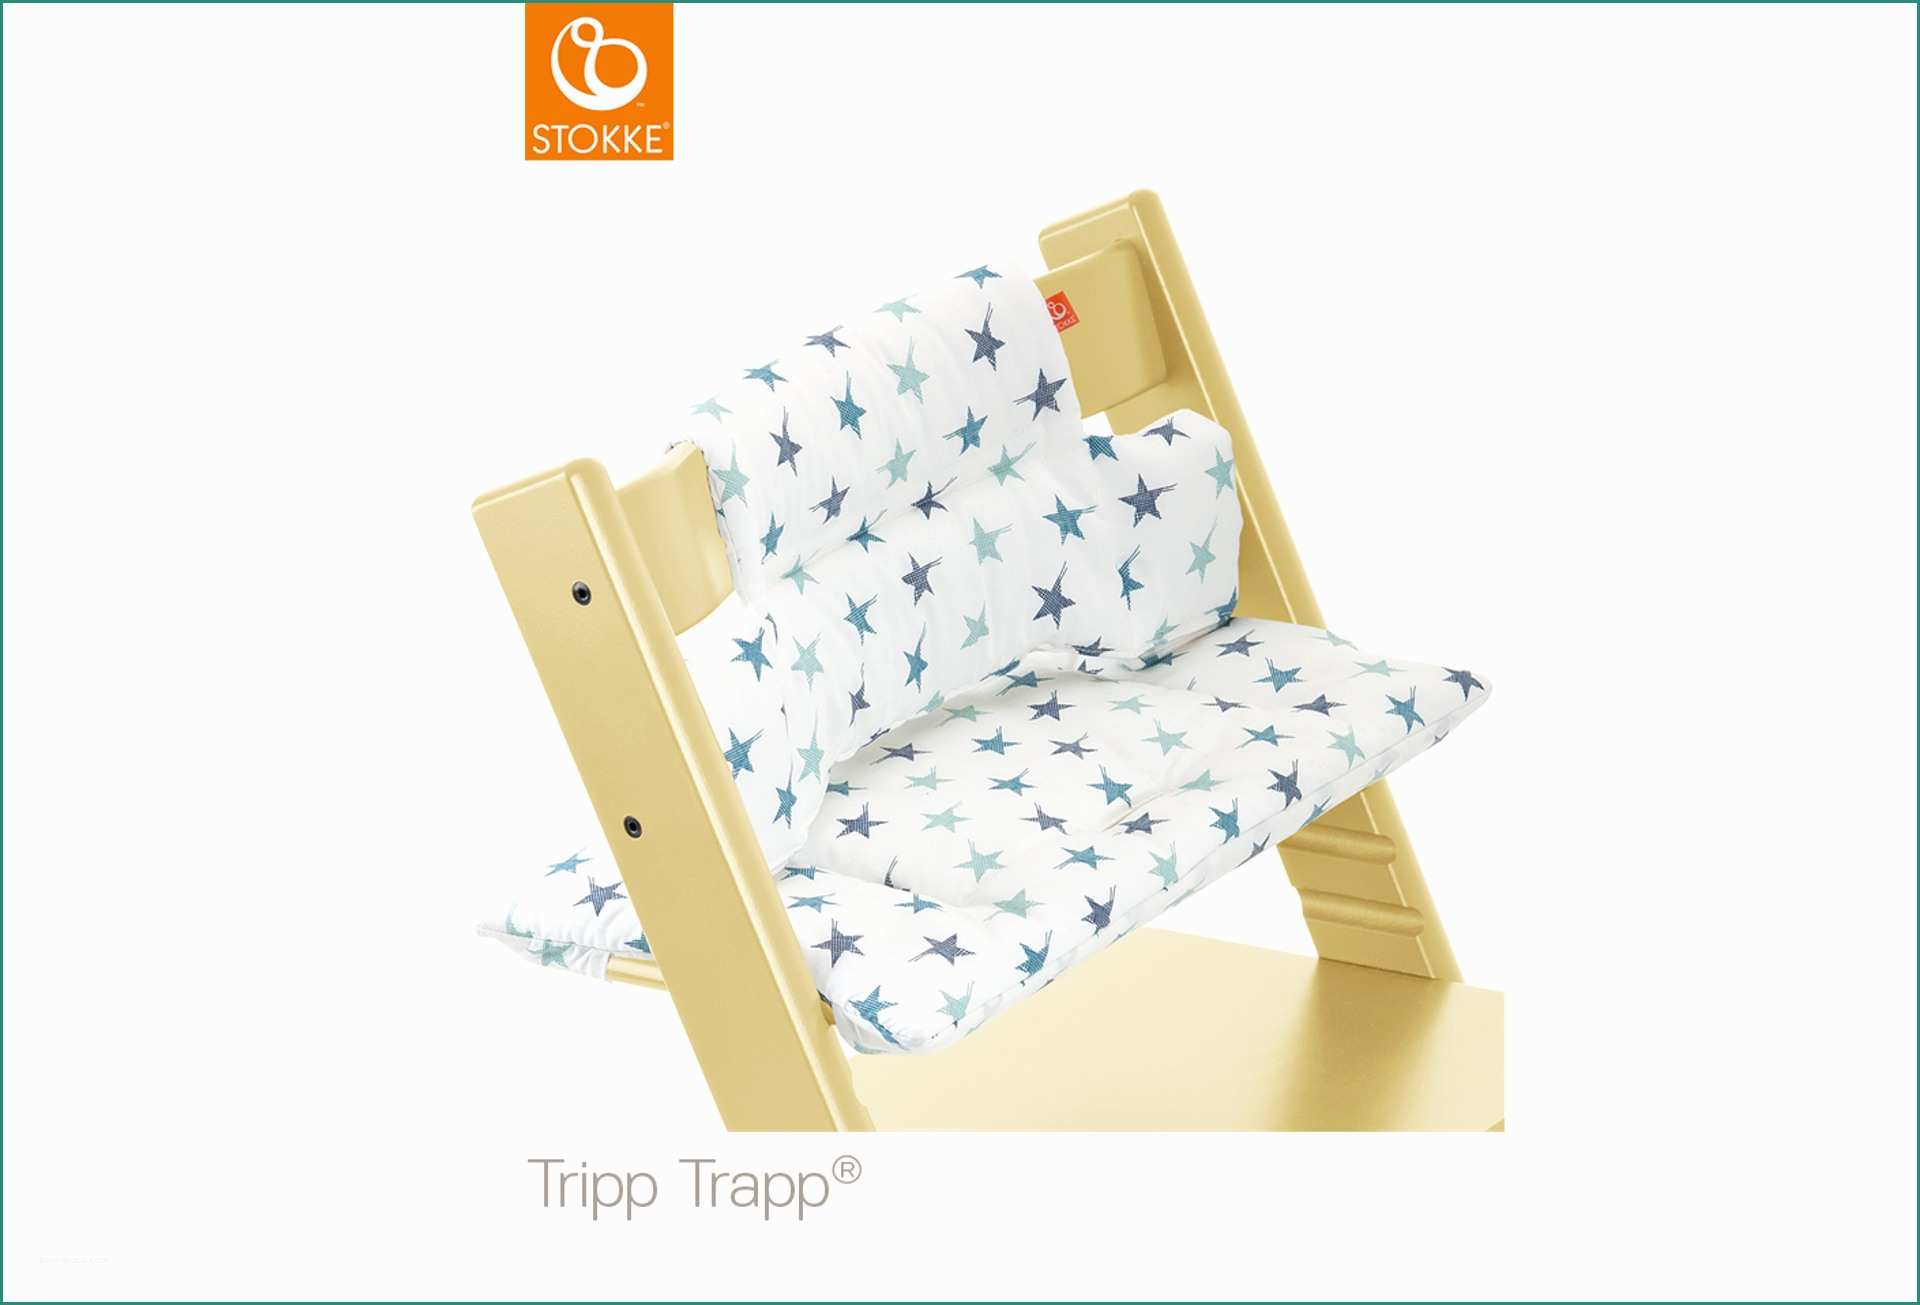 Seggiolone Stokke Tripp Trapp E Trip Trap Stuhl Perfect Triptrap Stuhl Nett Schones Zuhause Trip